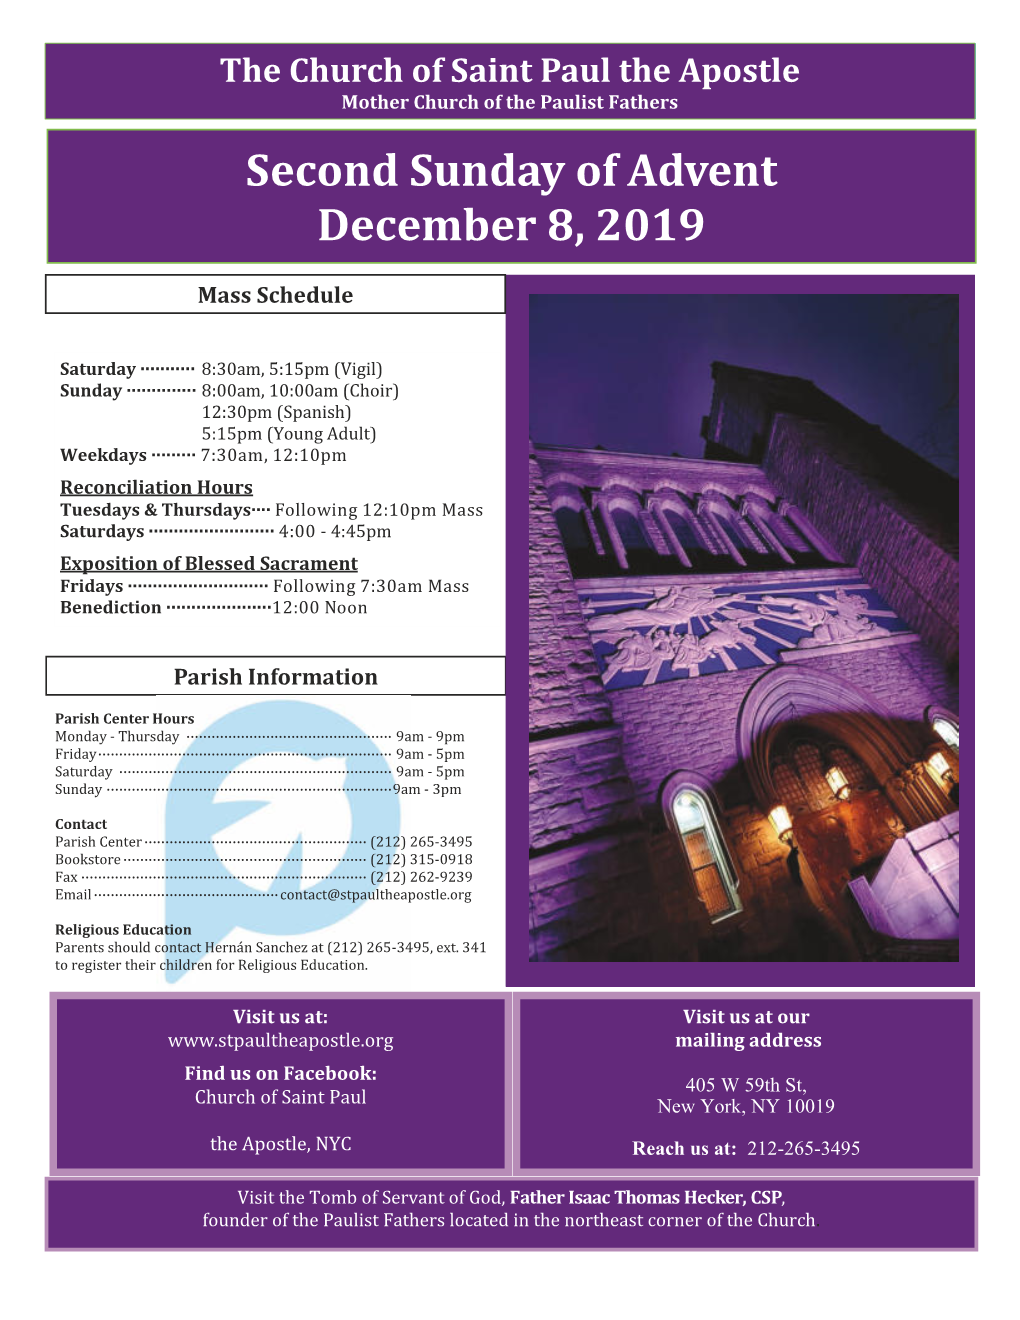 Second Sunday of Advent December 8, 2019